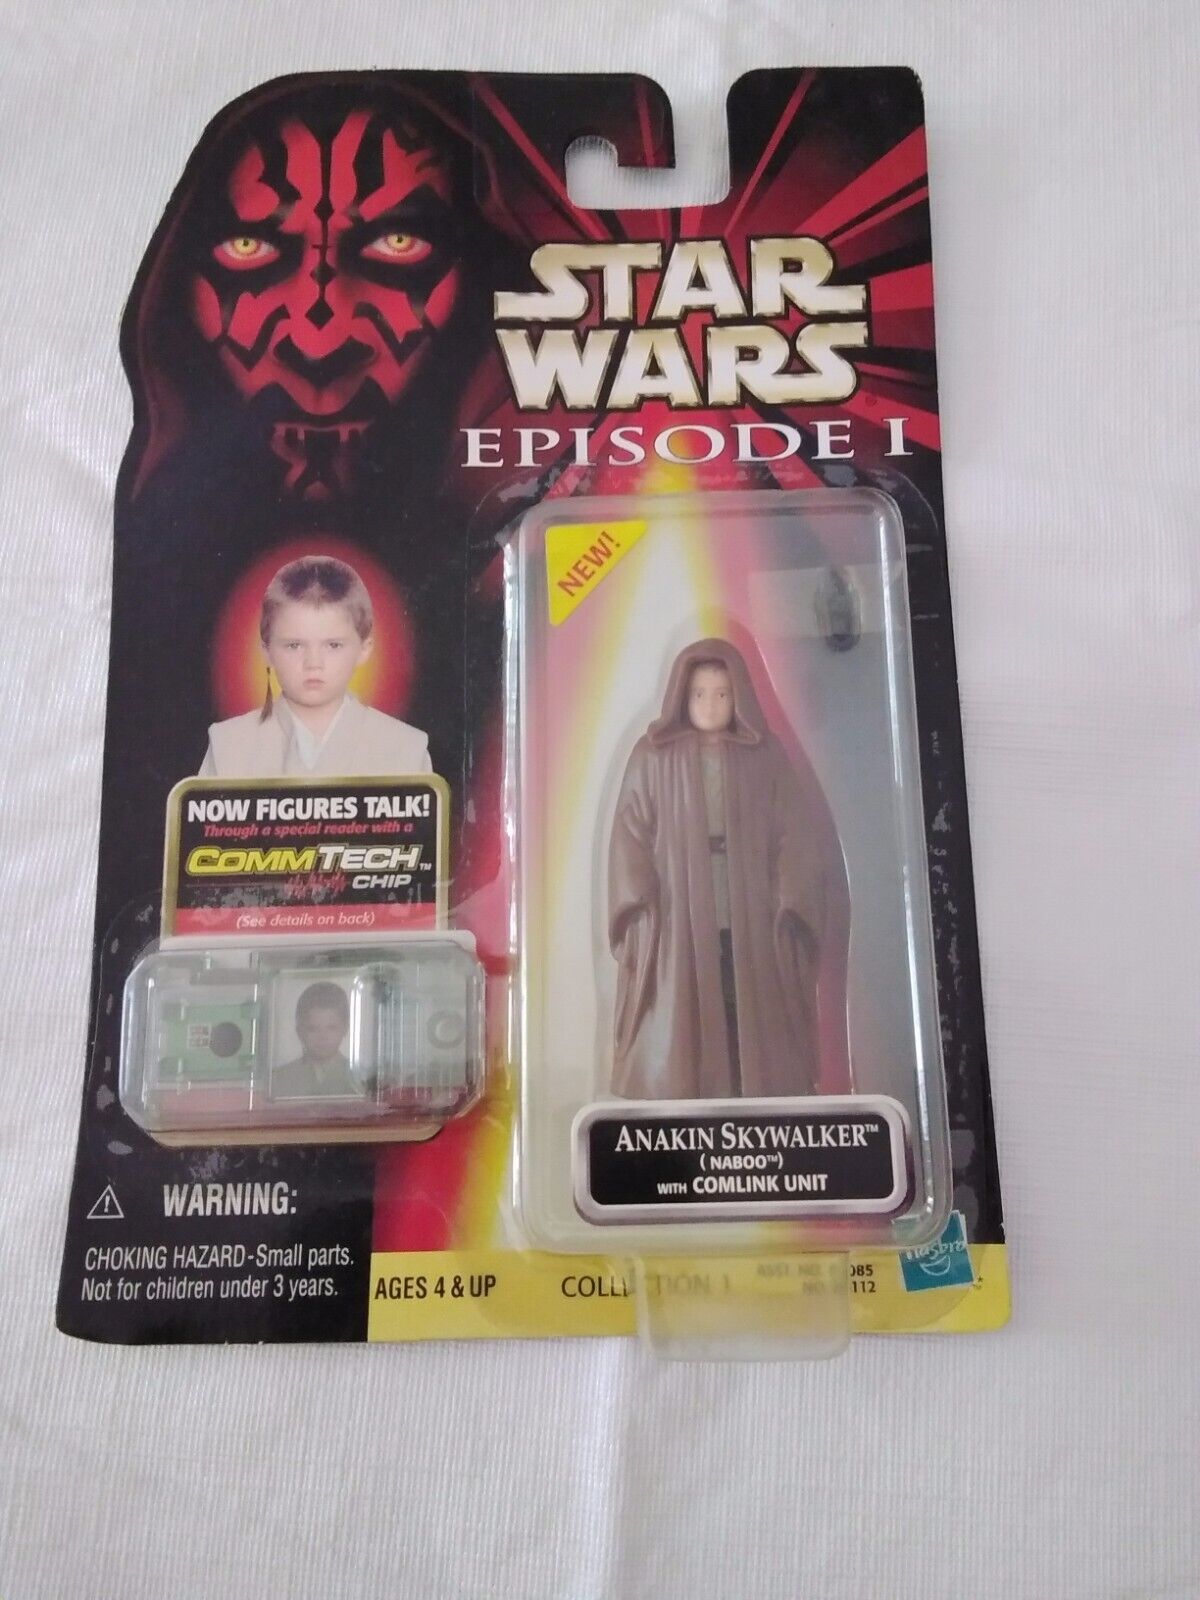 1999 Star Wars Anakin Skywalker Figure with Commlink Unit.  